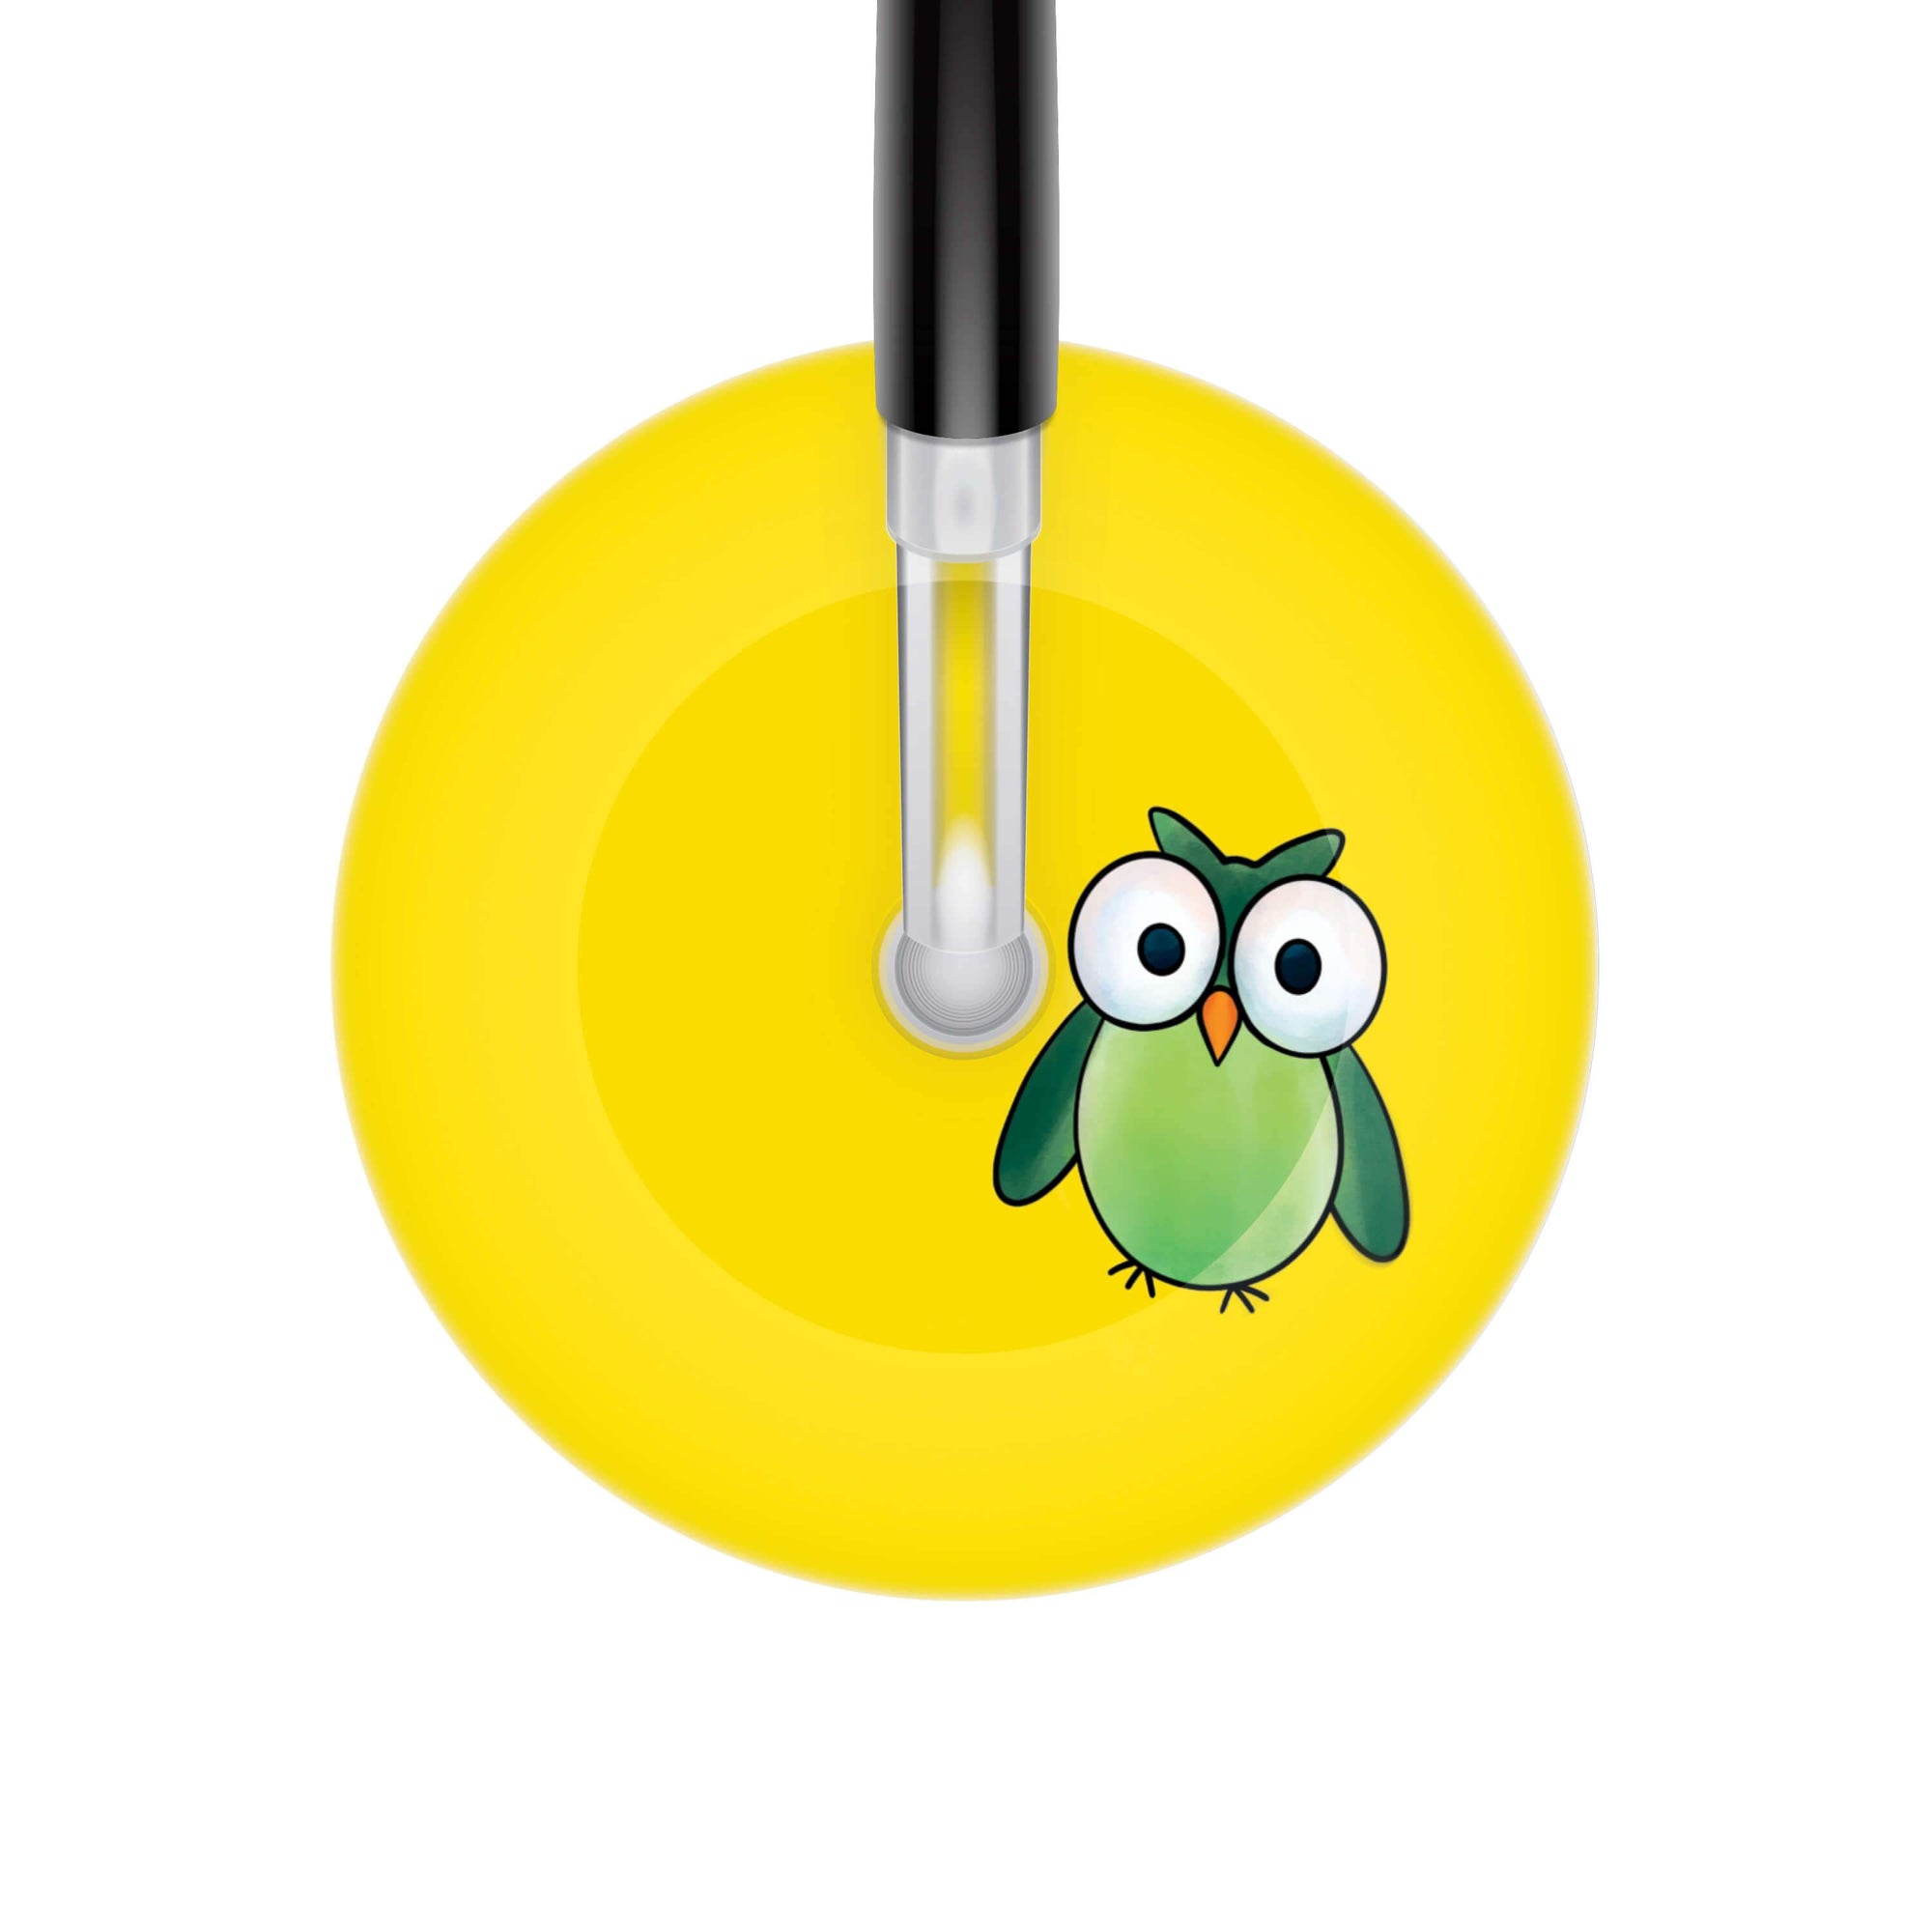 Ultrascope Single Stethoscope Cartoon Owl - Single Stethoscope